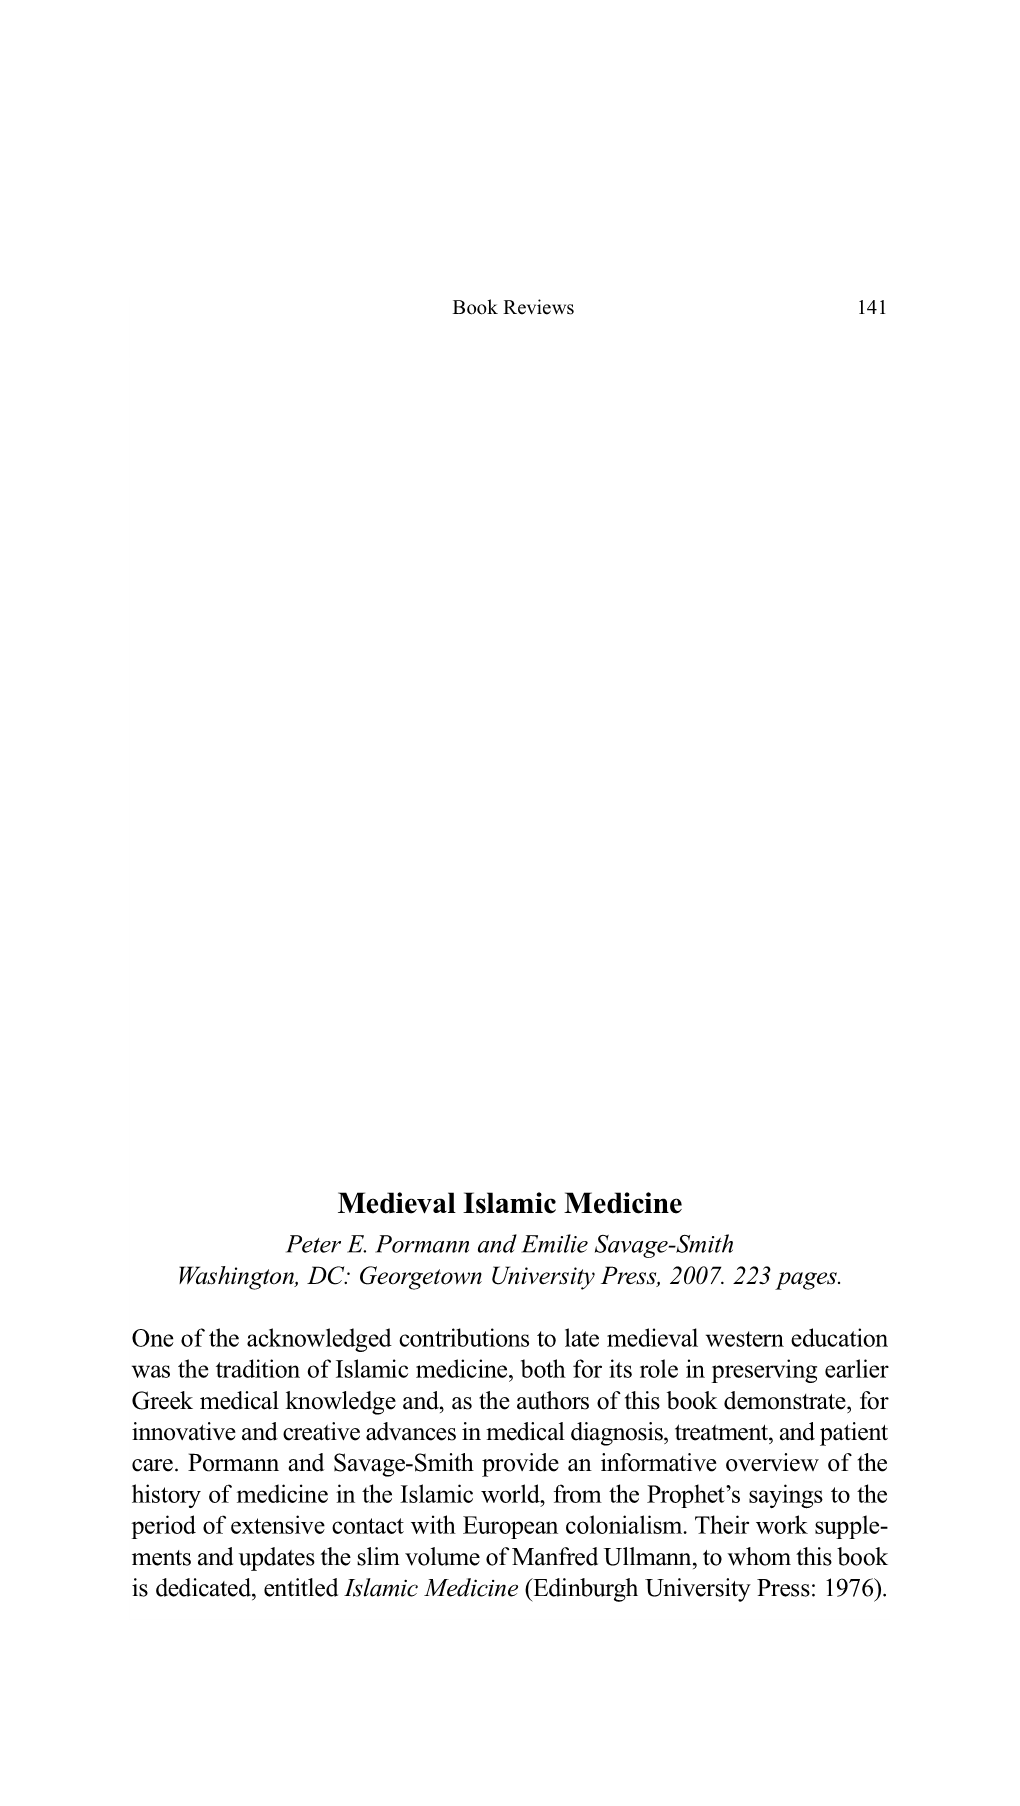 Medieval Islamic Medicine Peter E